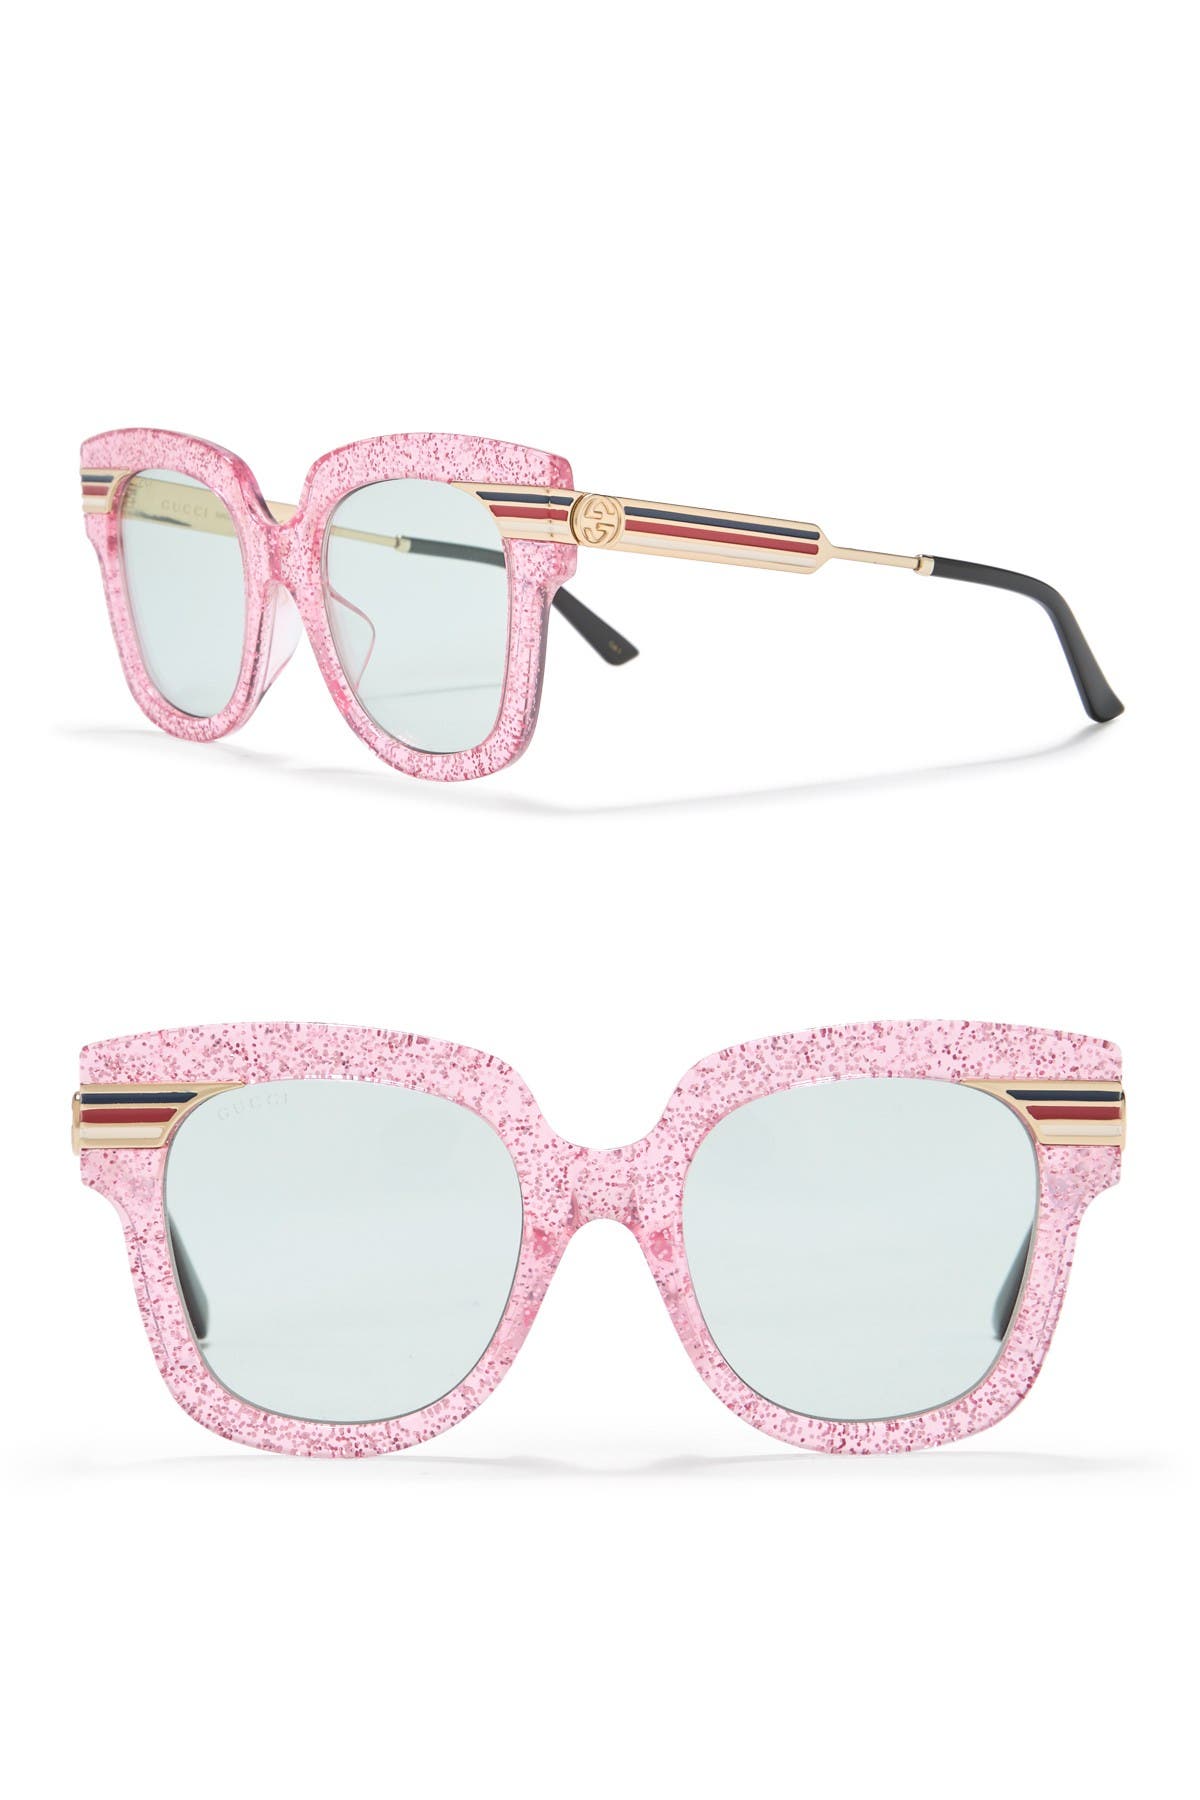 gucci glasses pink glitter